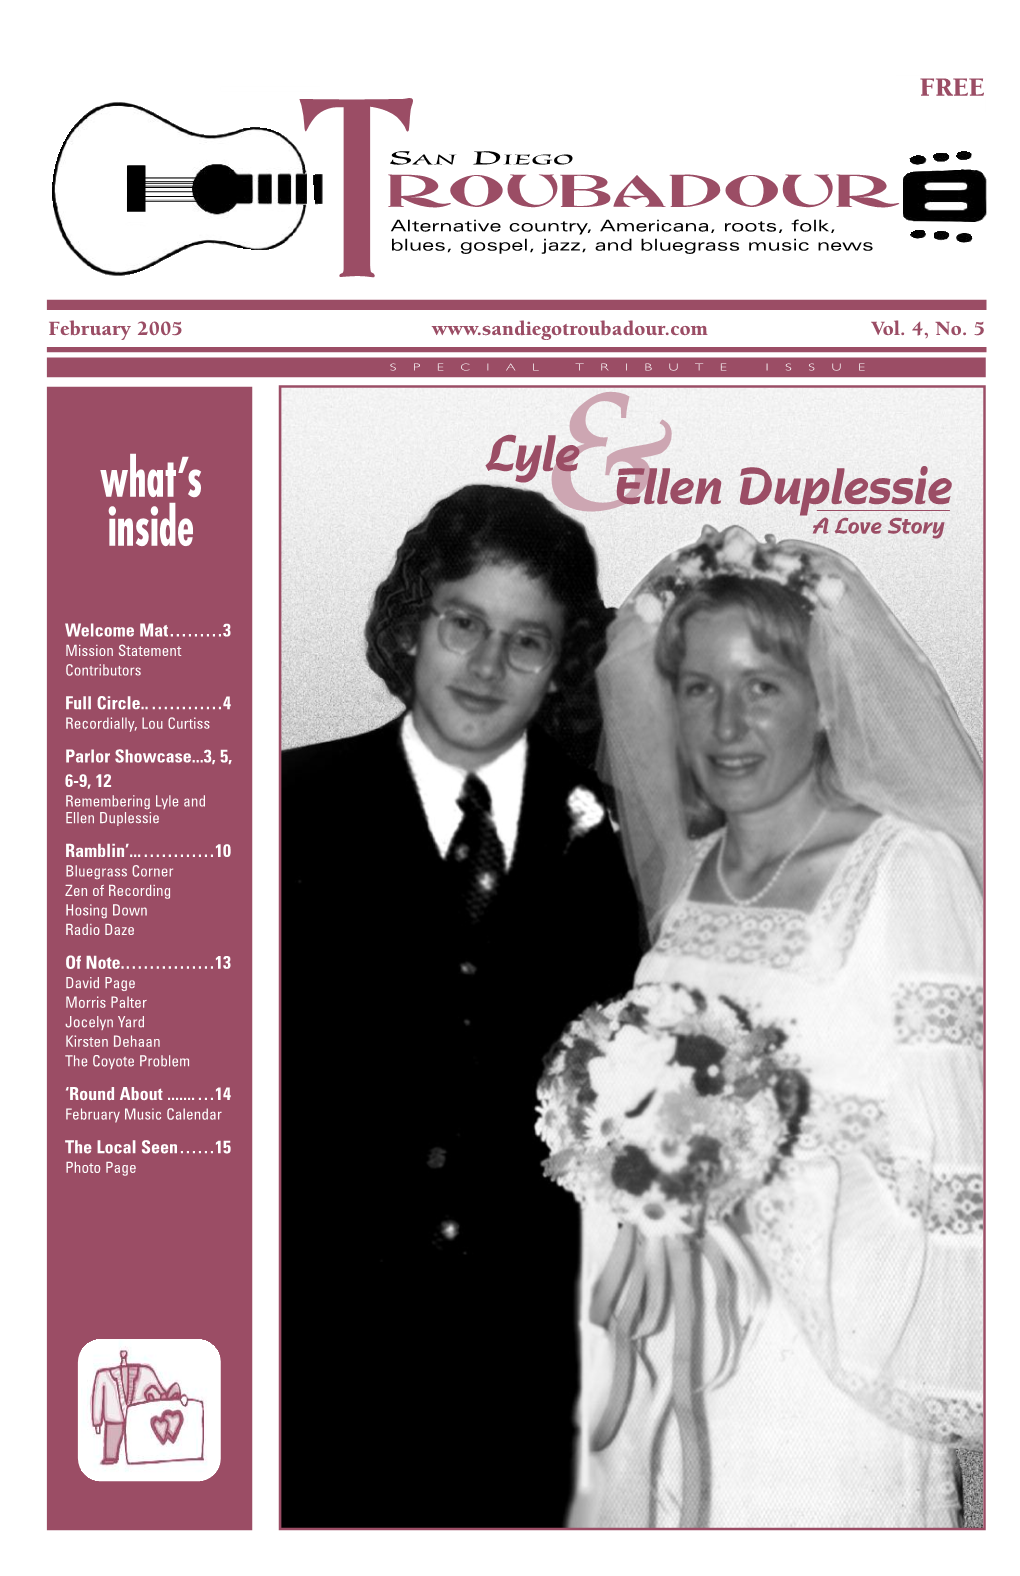 Lyle What’S &Ellen Duplessie Inside a Love Story